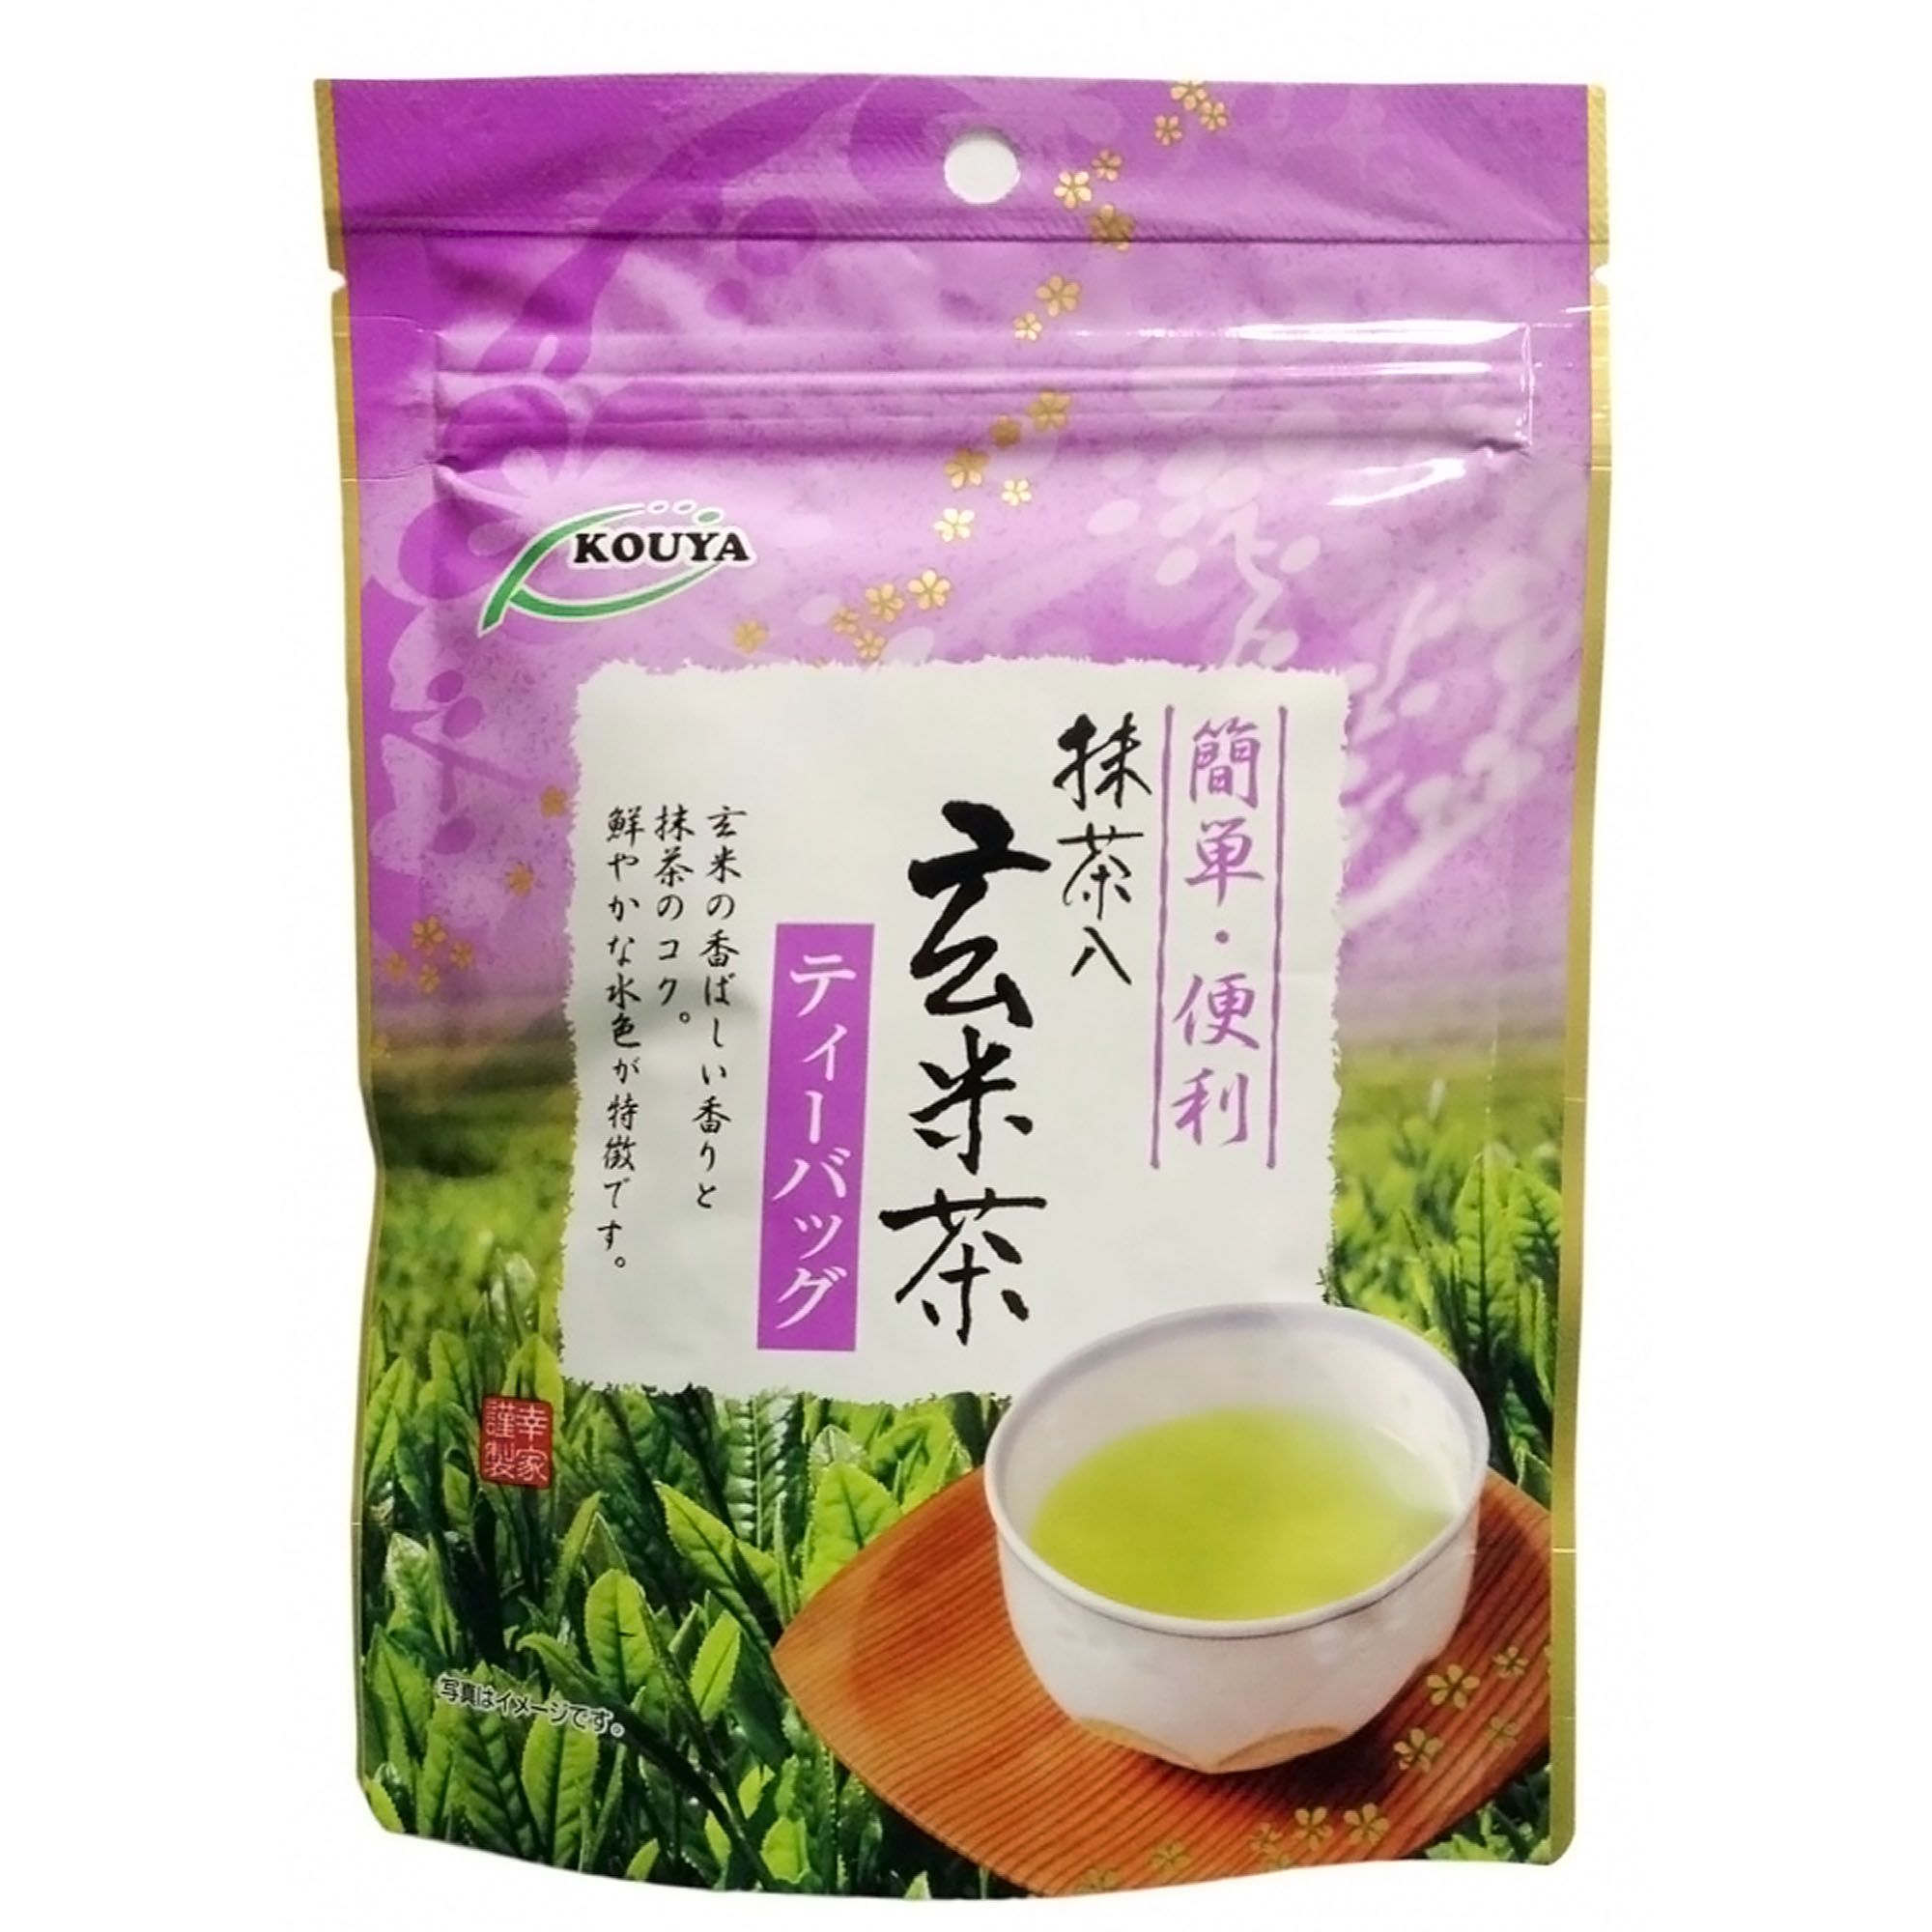 цена Японский чай Kouya Геммай-ча (15 шт), 30 г